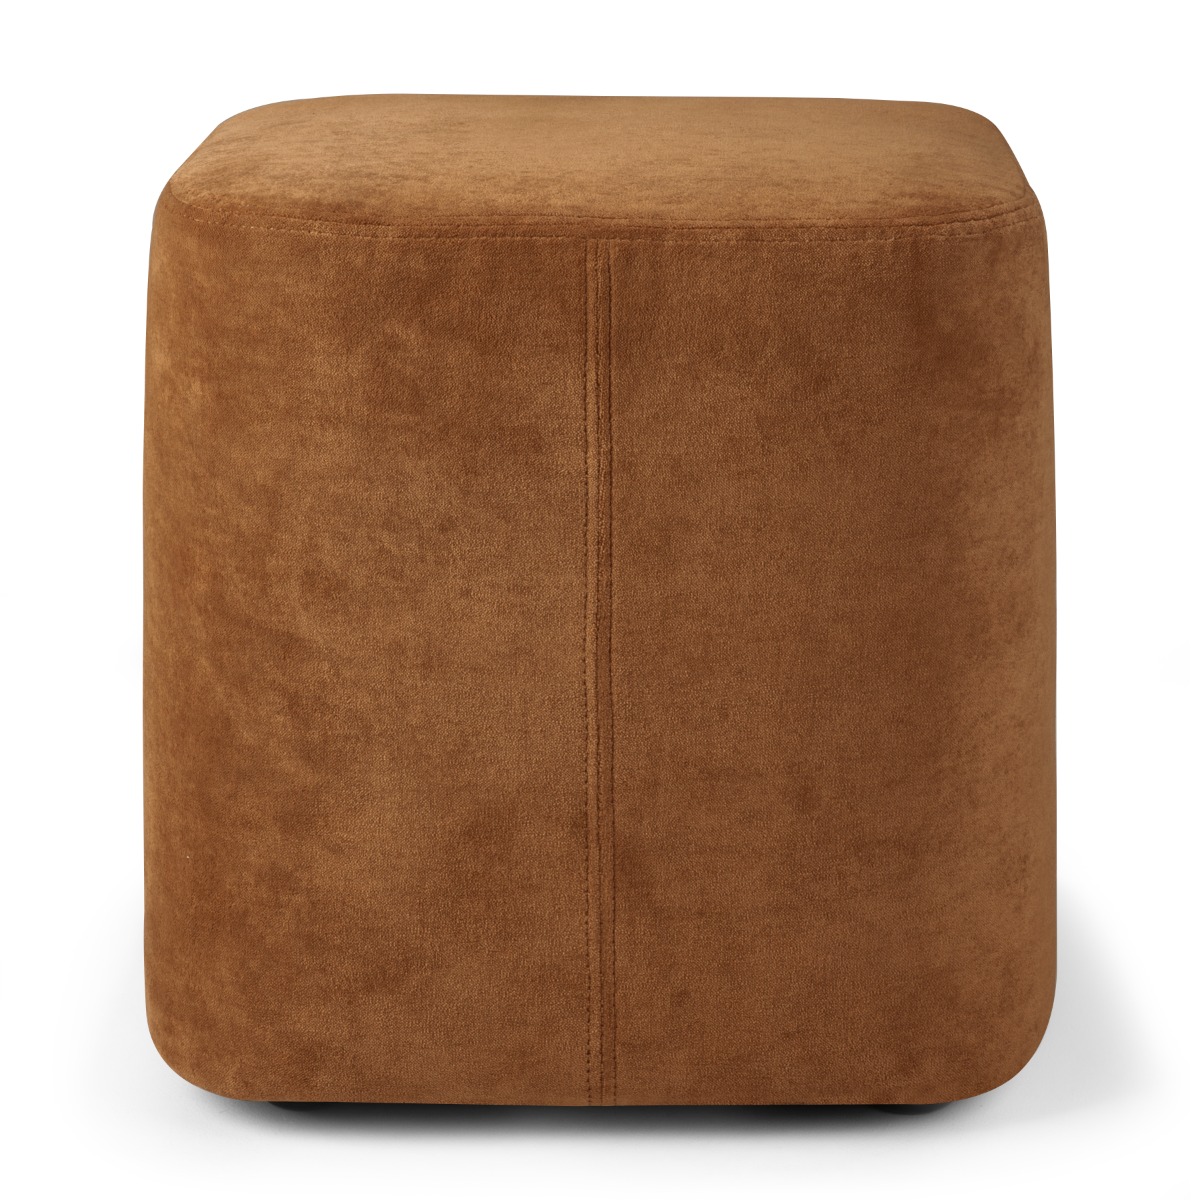 Cube Footstool in Cinnamon